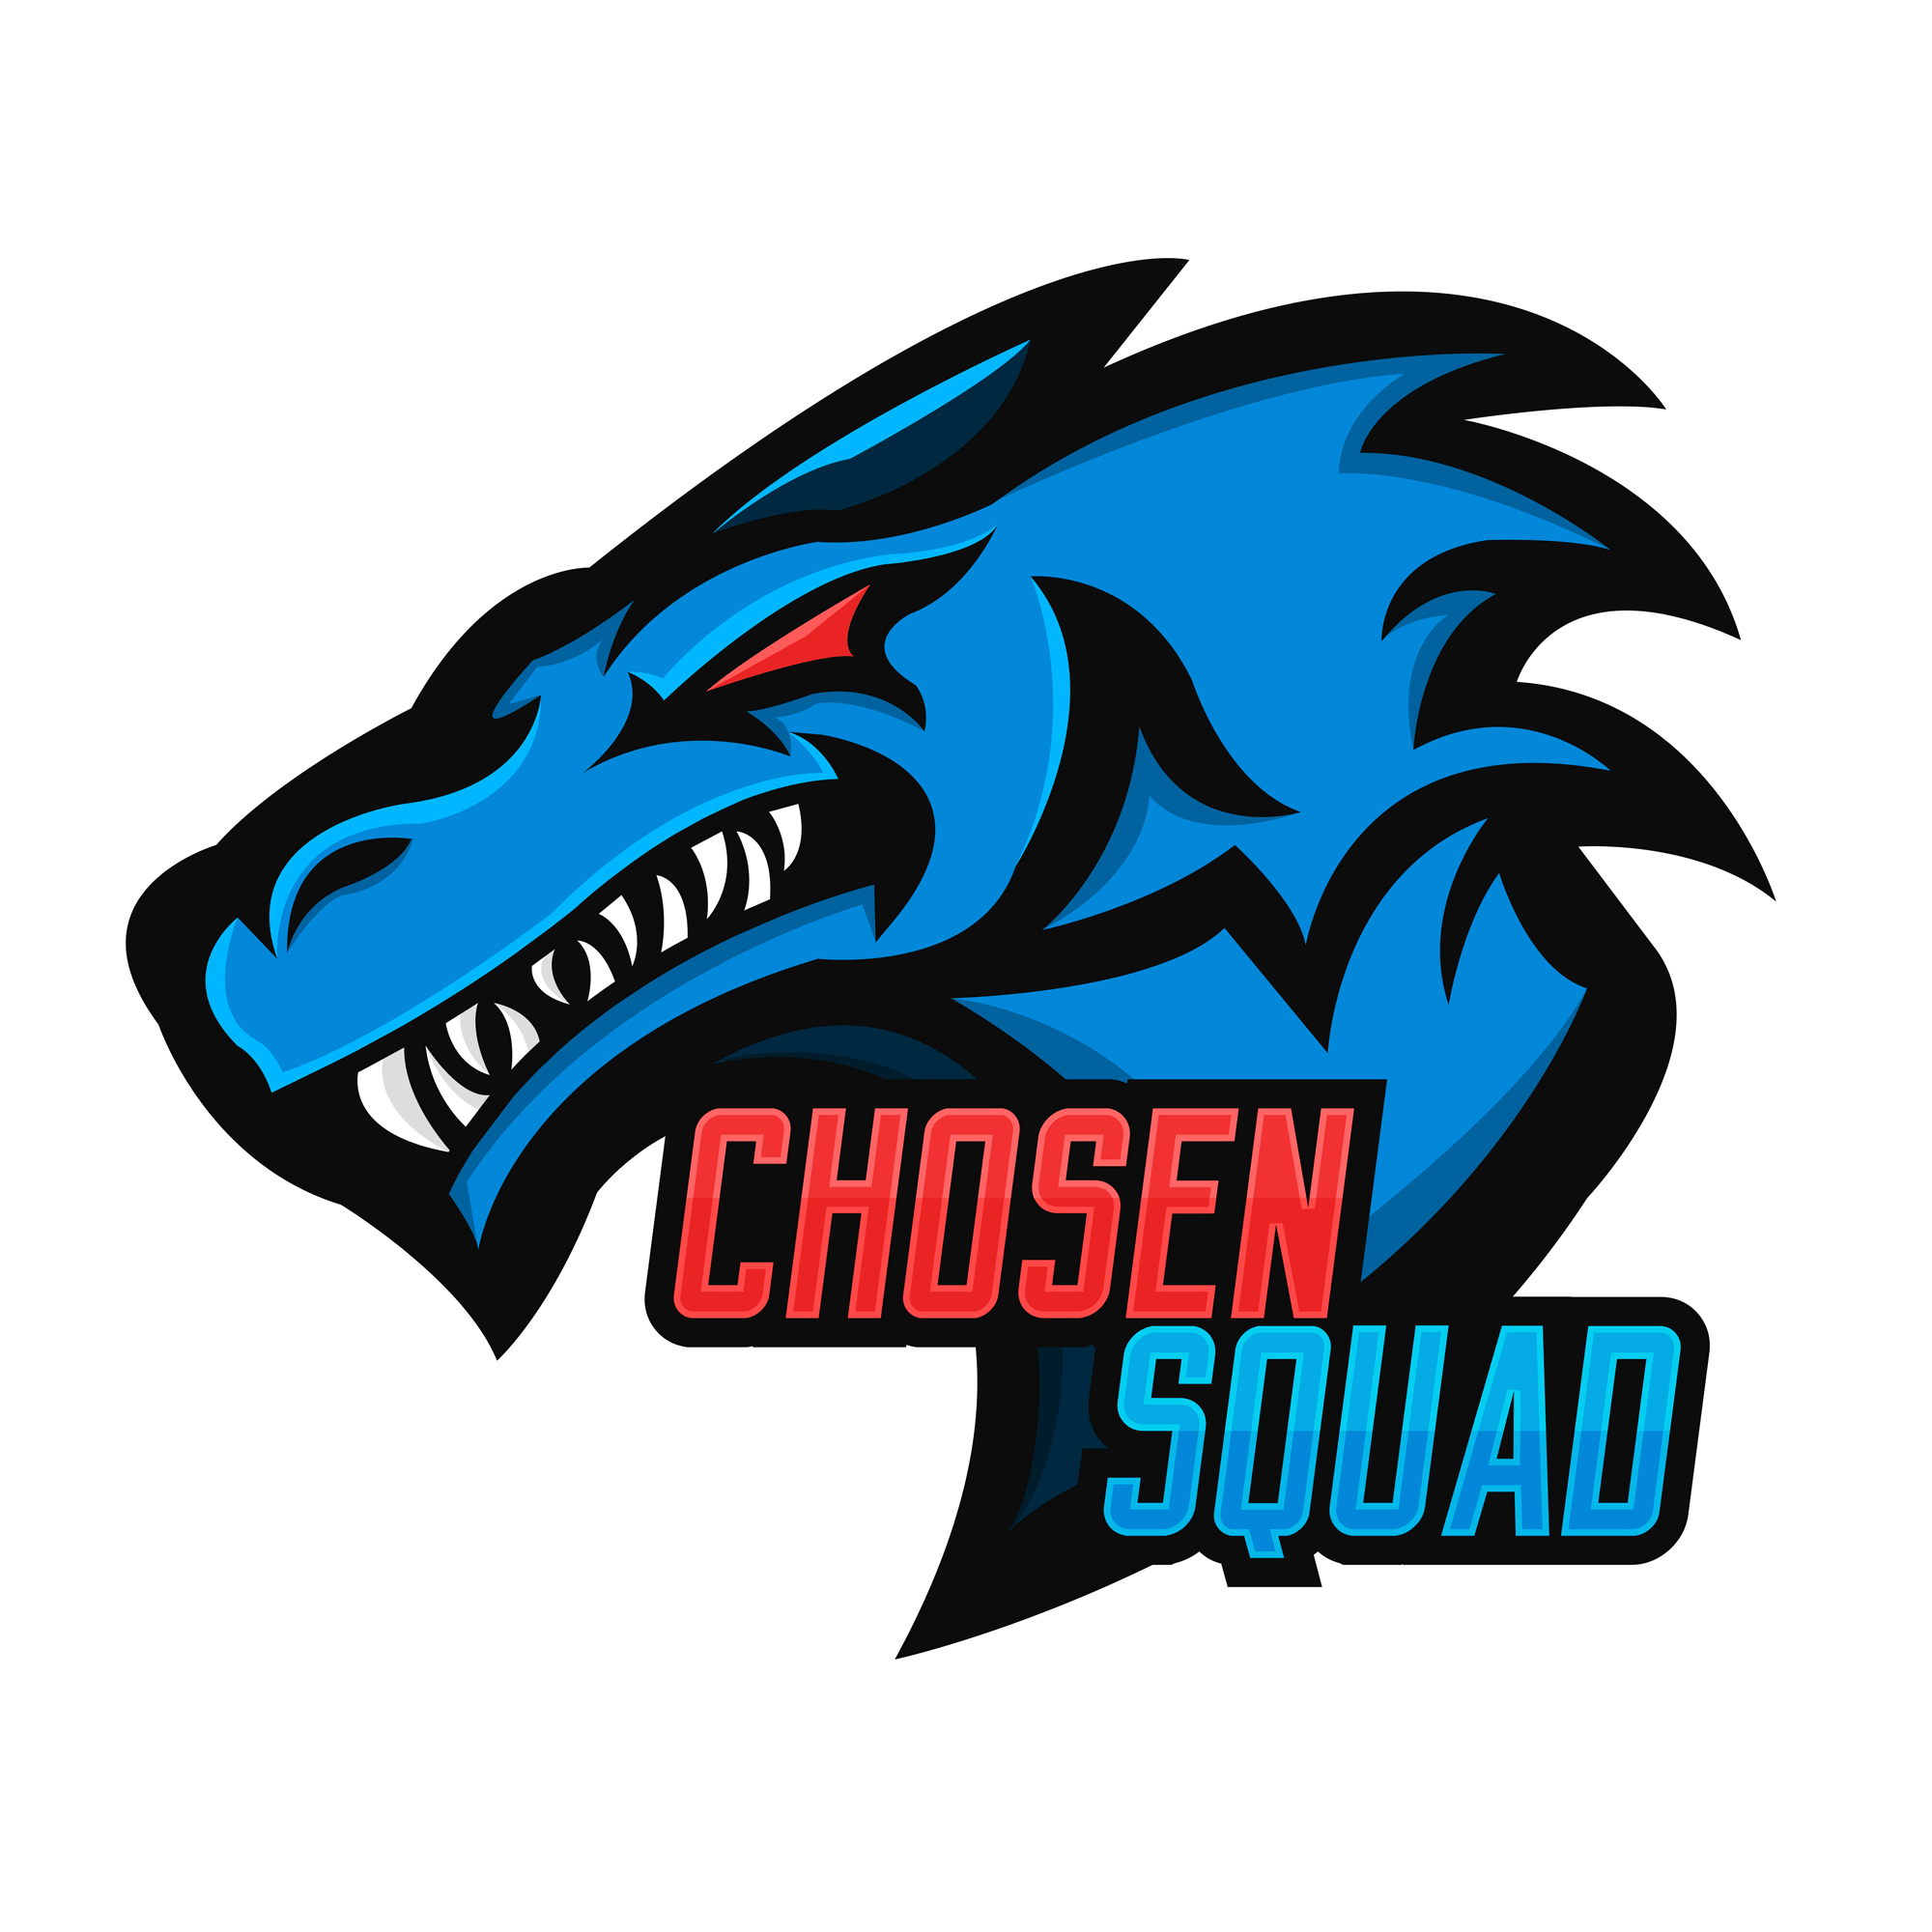 Chosen Logo - Chosen Squad Logo